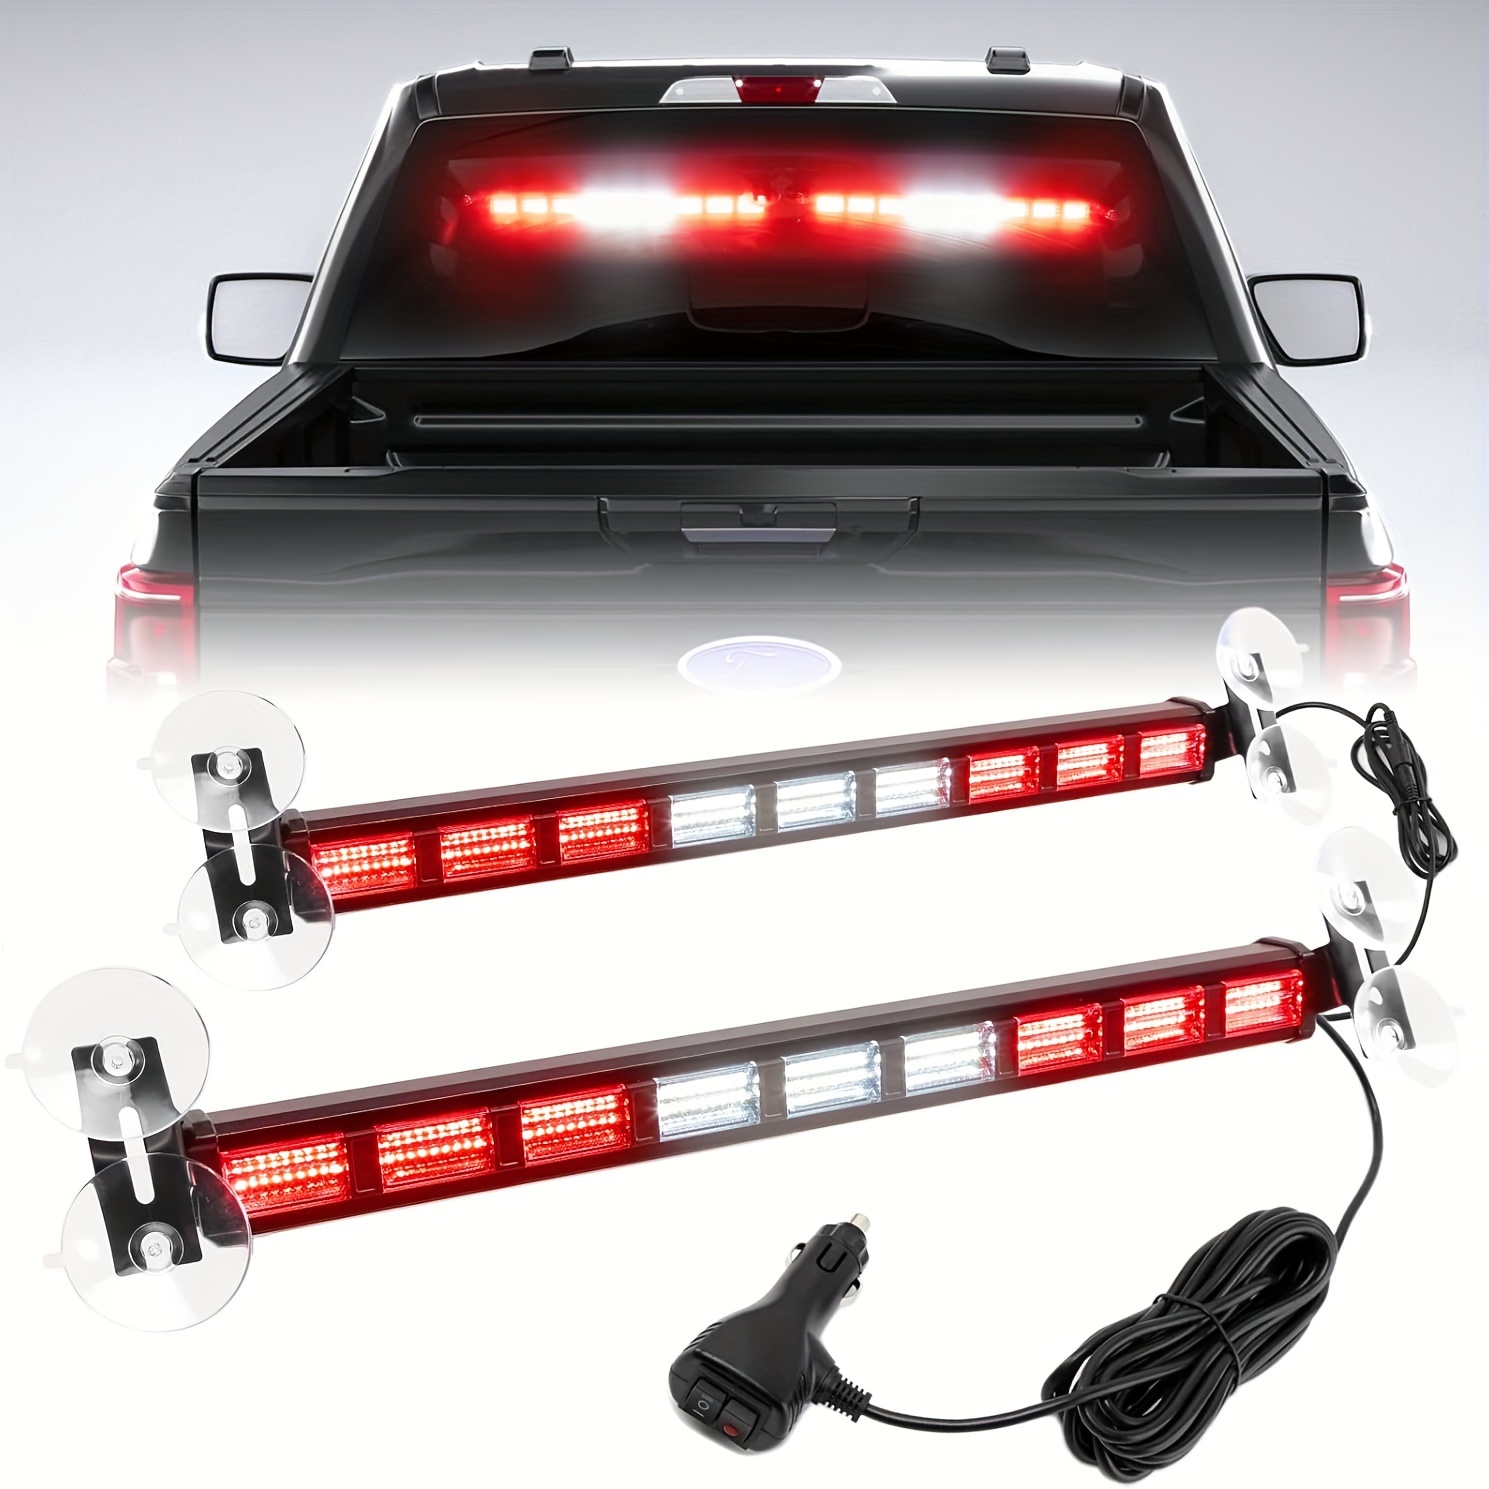 2pcs 2 In 1 Strobe Traffic Advisor Warning Lights Bar For Vehicles Trucks  26 Flash Patterns 17 Inch Safety Emergency Light